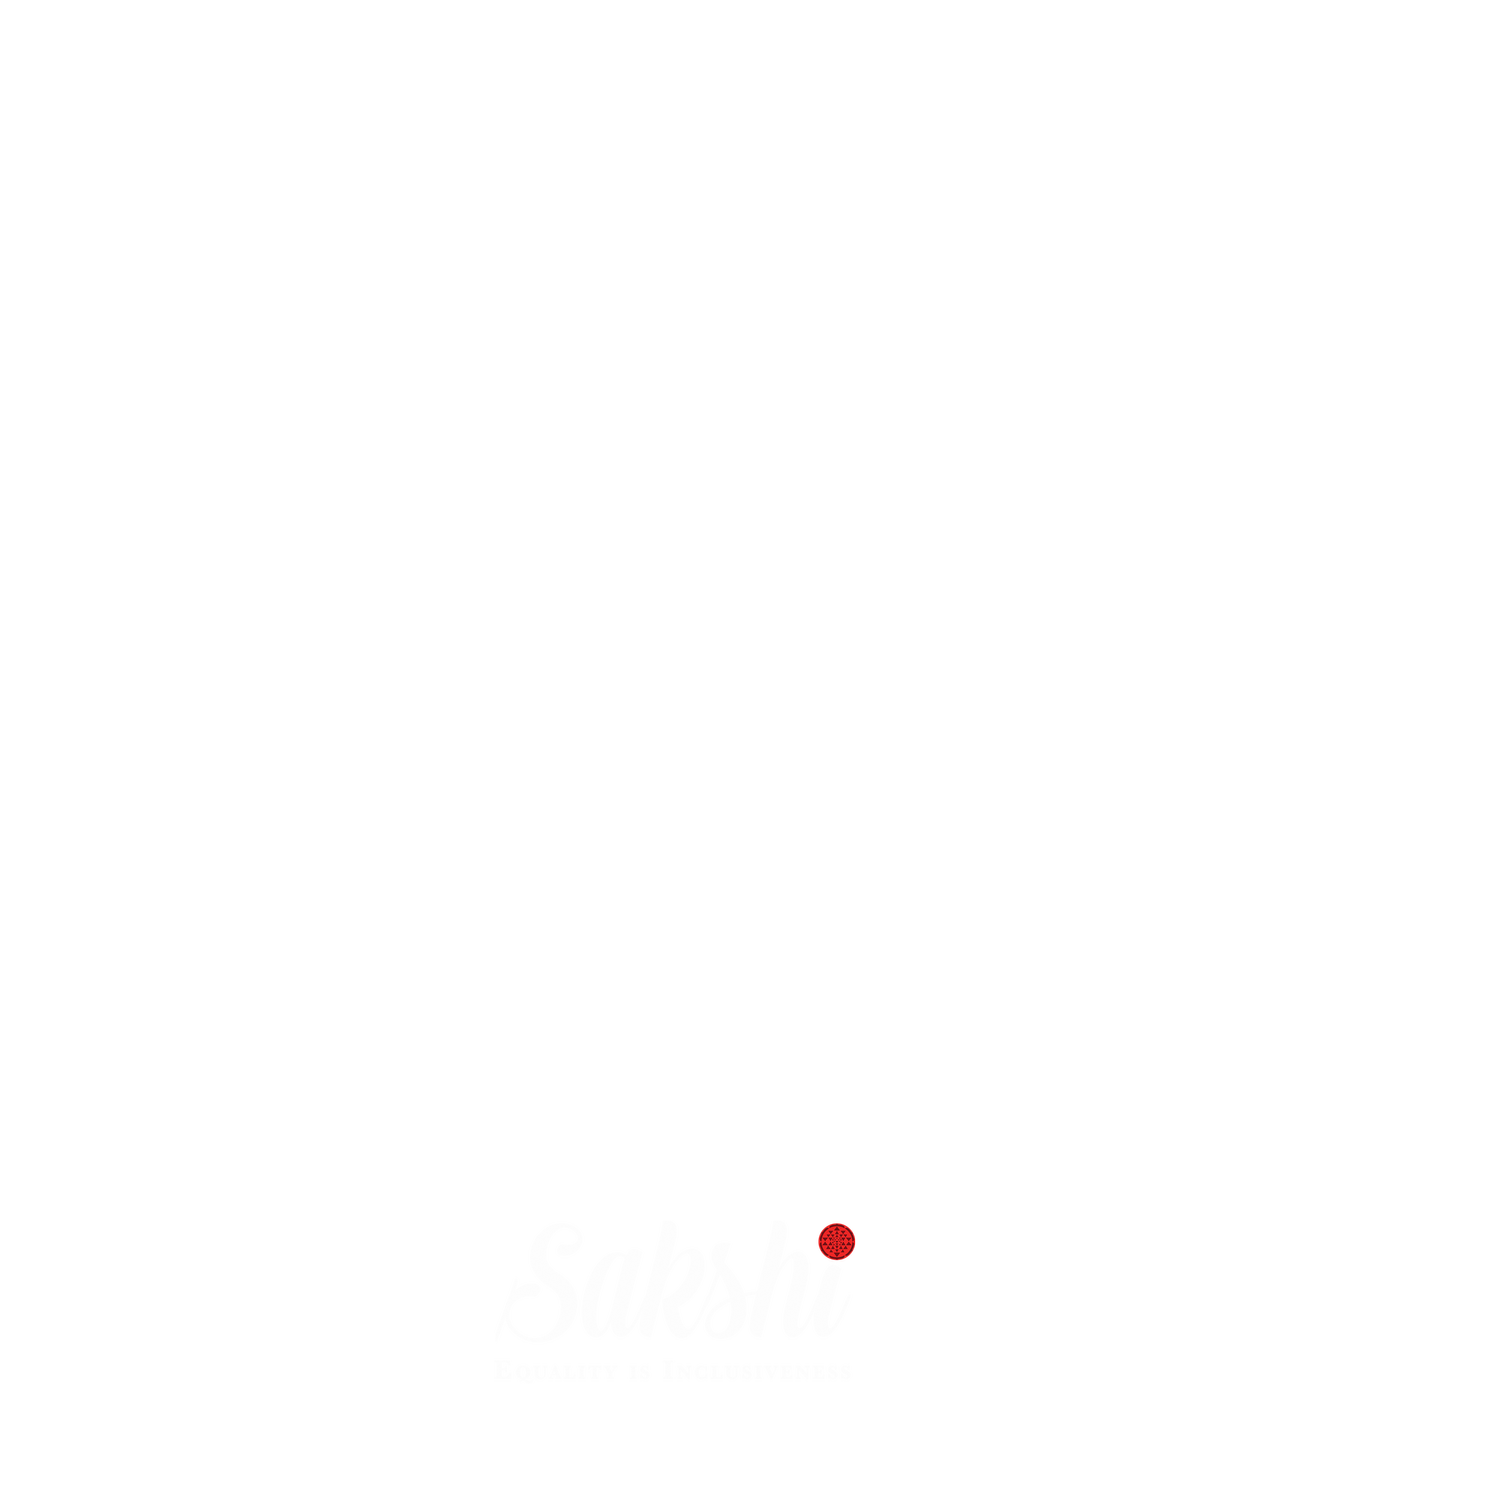 The Rakshin Project